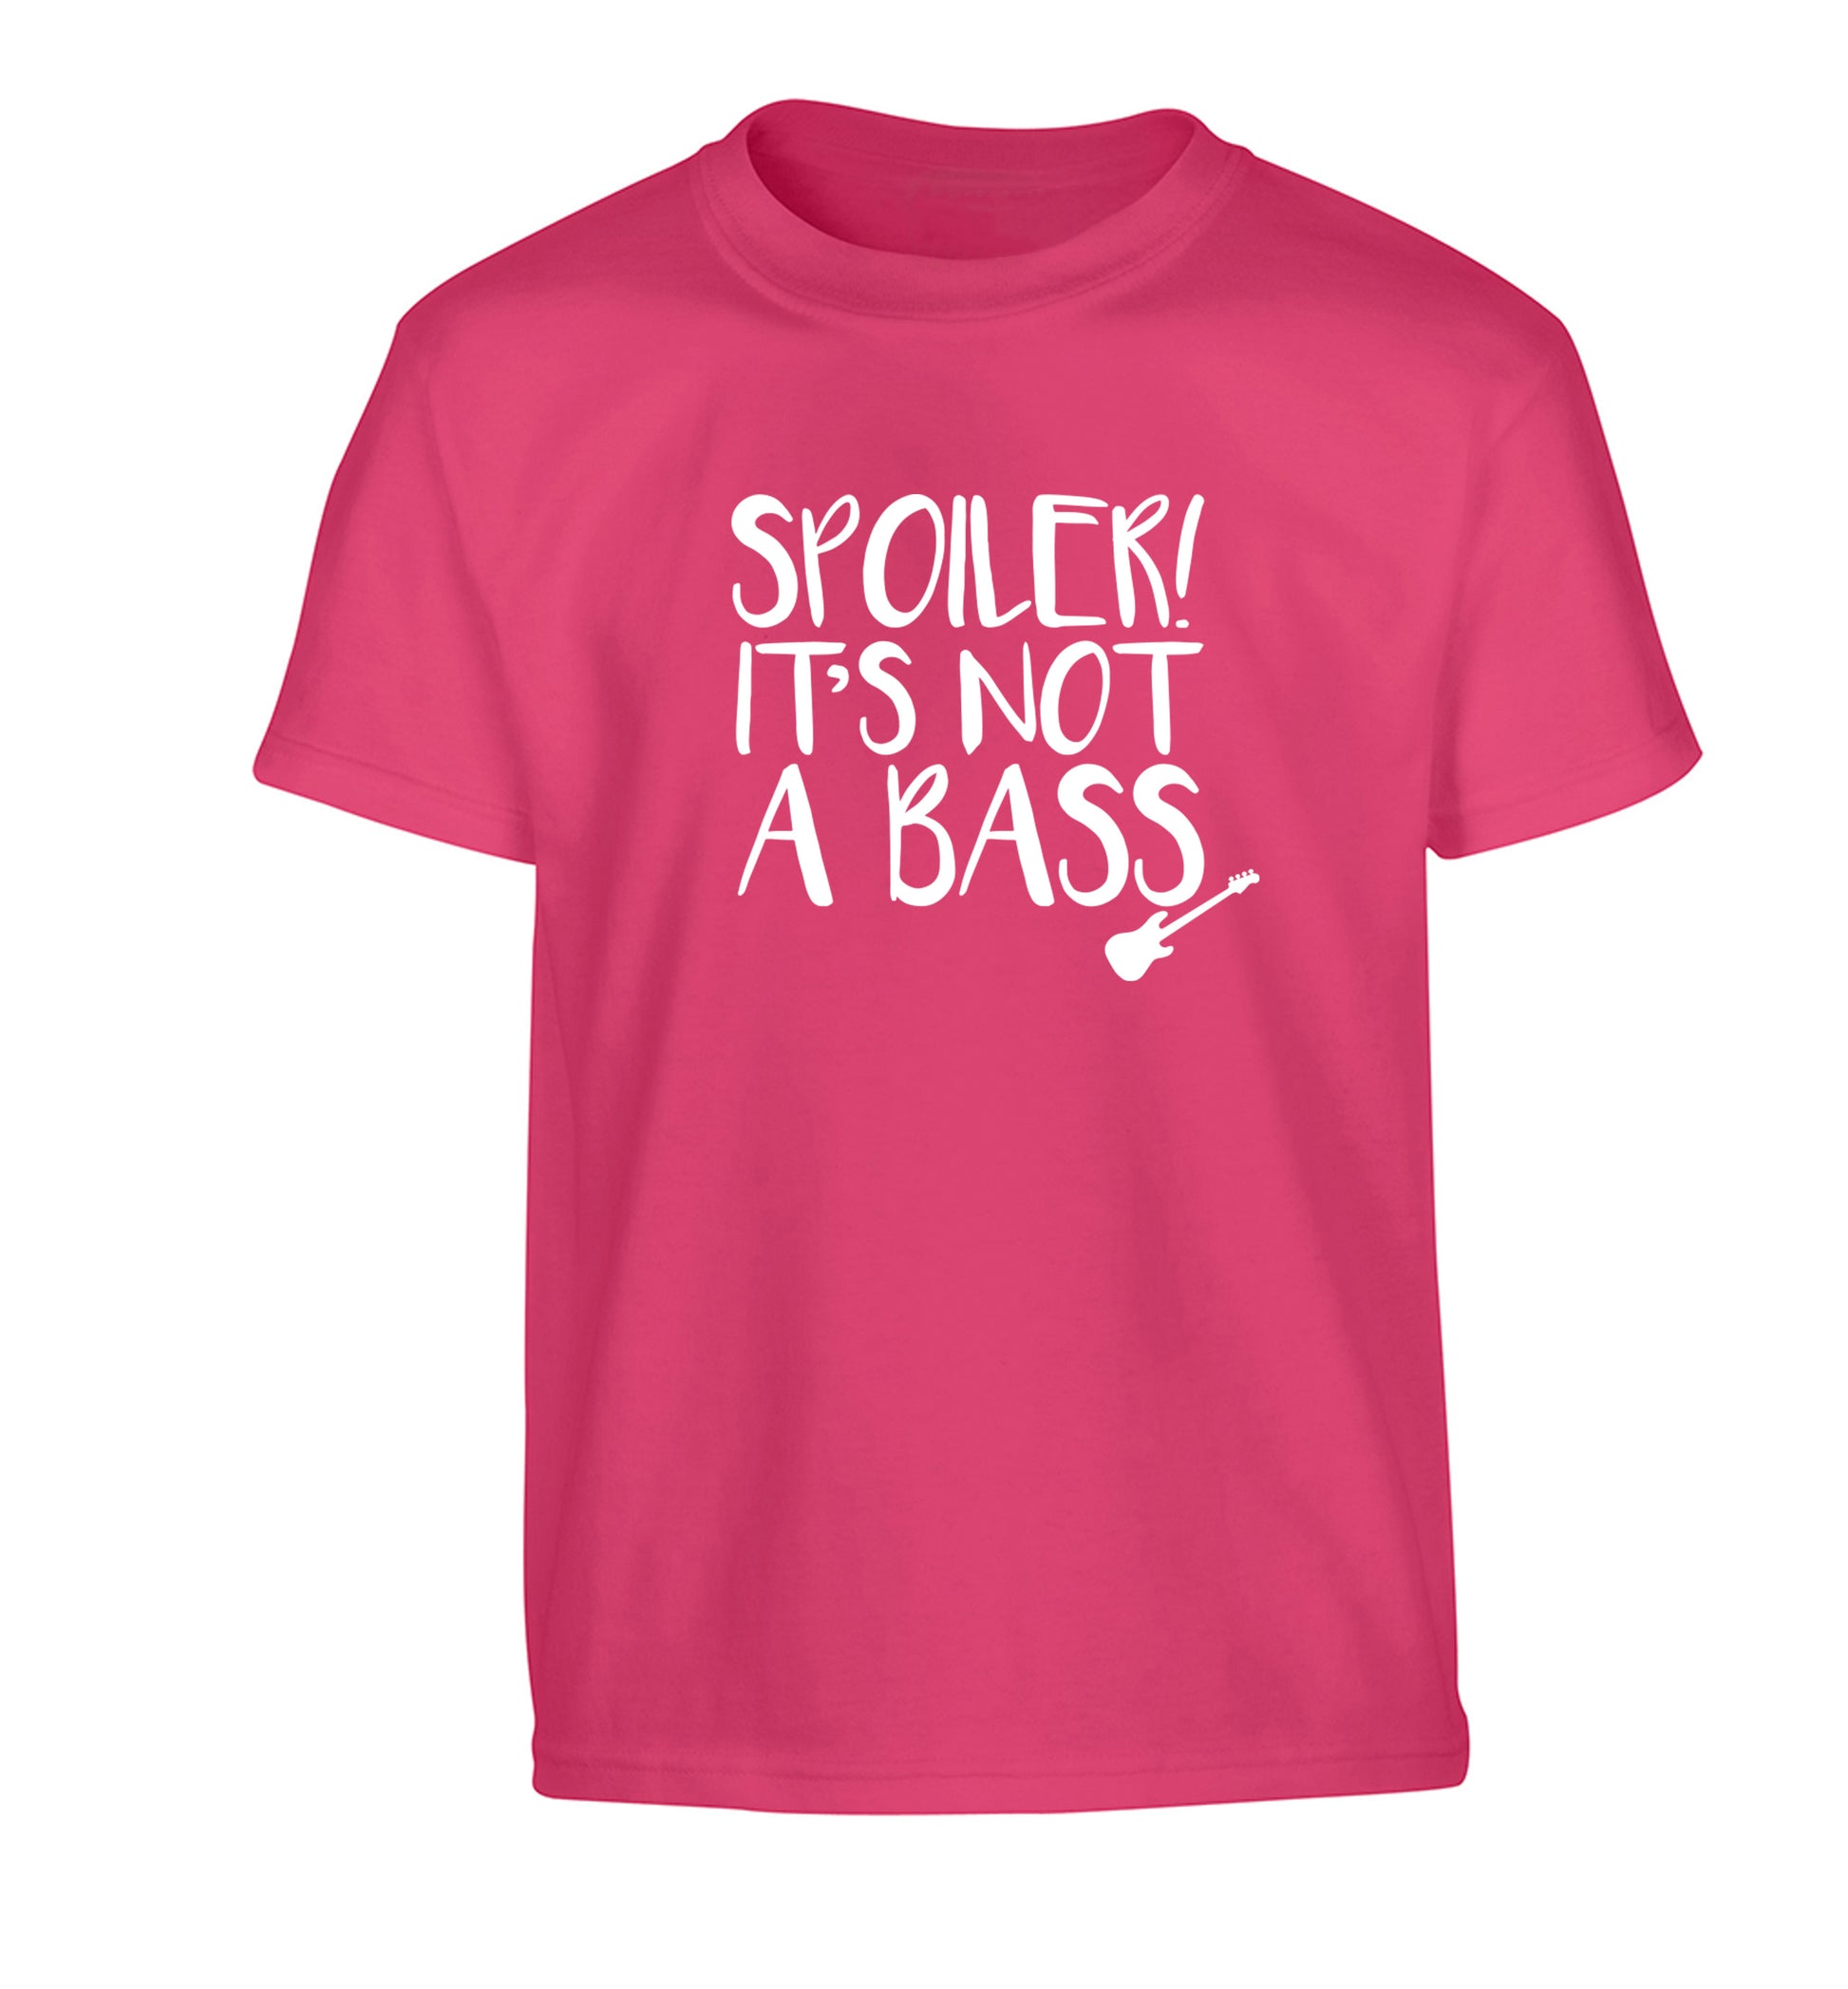 Spoiler it's not a bass Children's pink Tshirt 12-13 Years